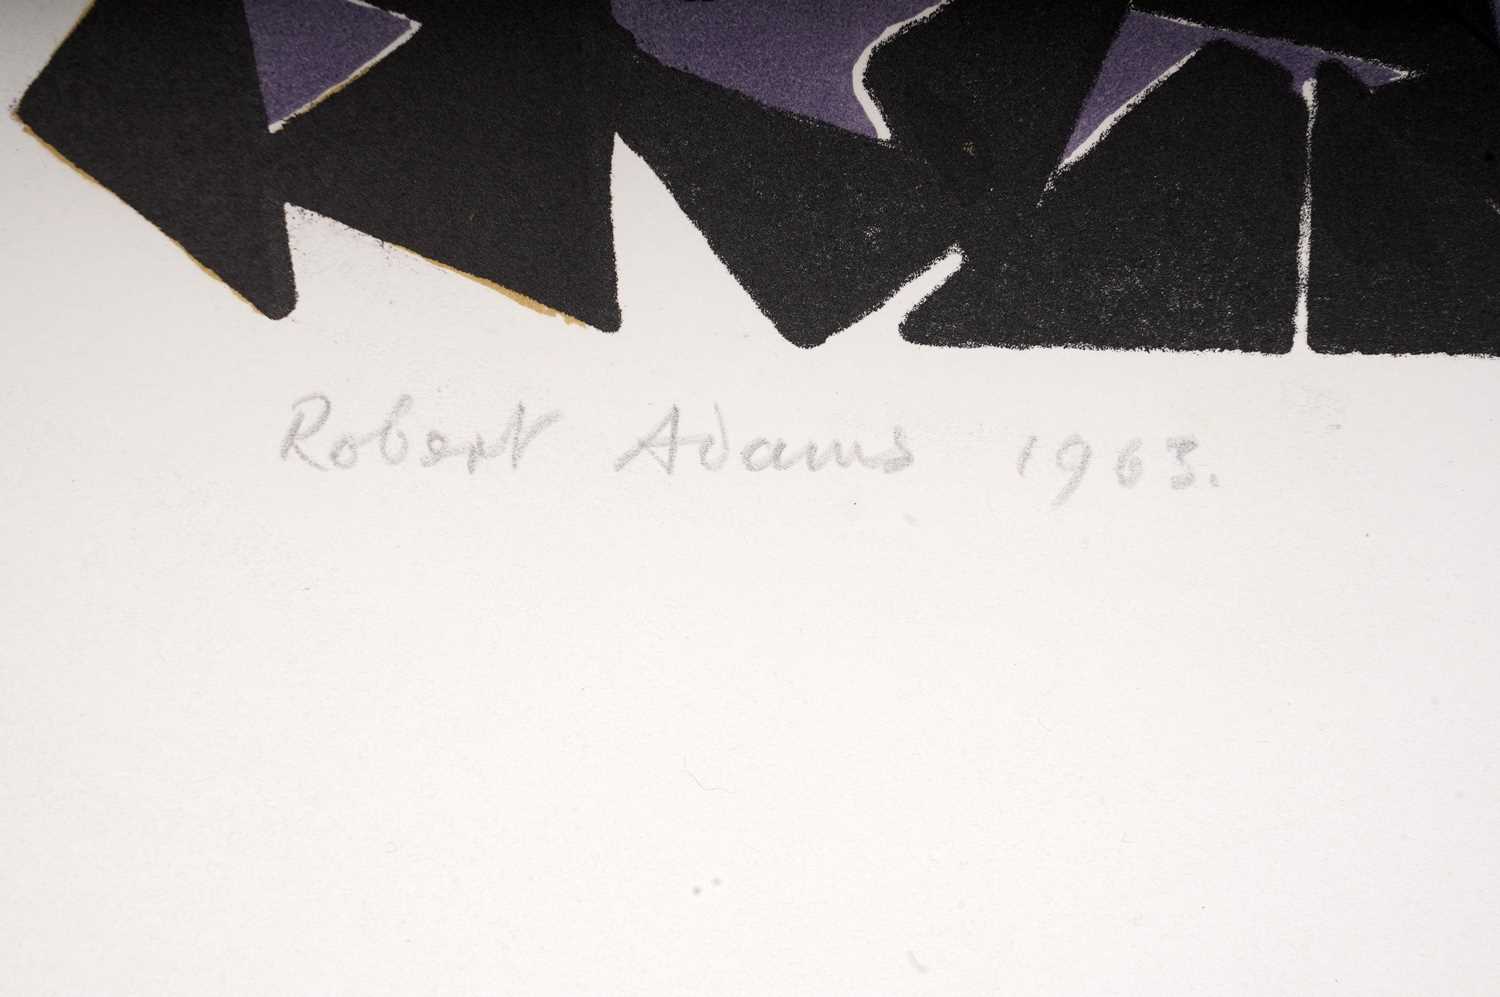 Robert Adams - Screen II | lithograph - Image 2 of 6